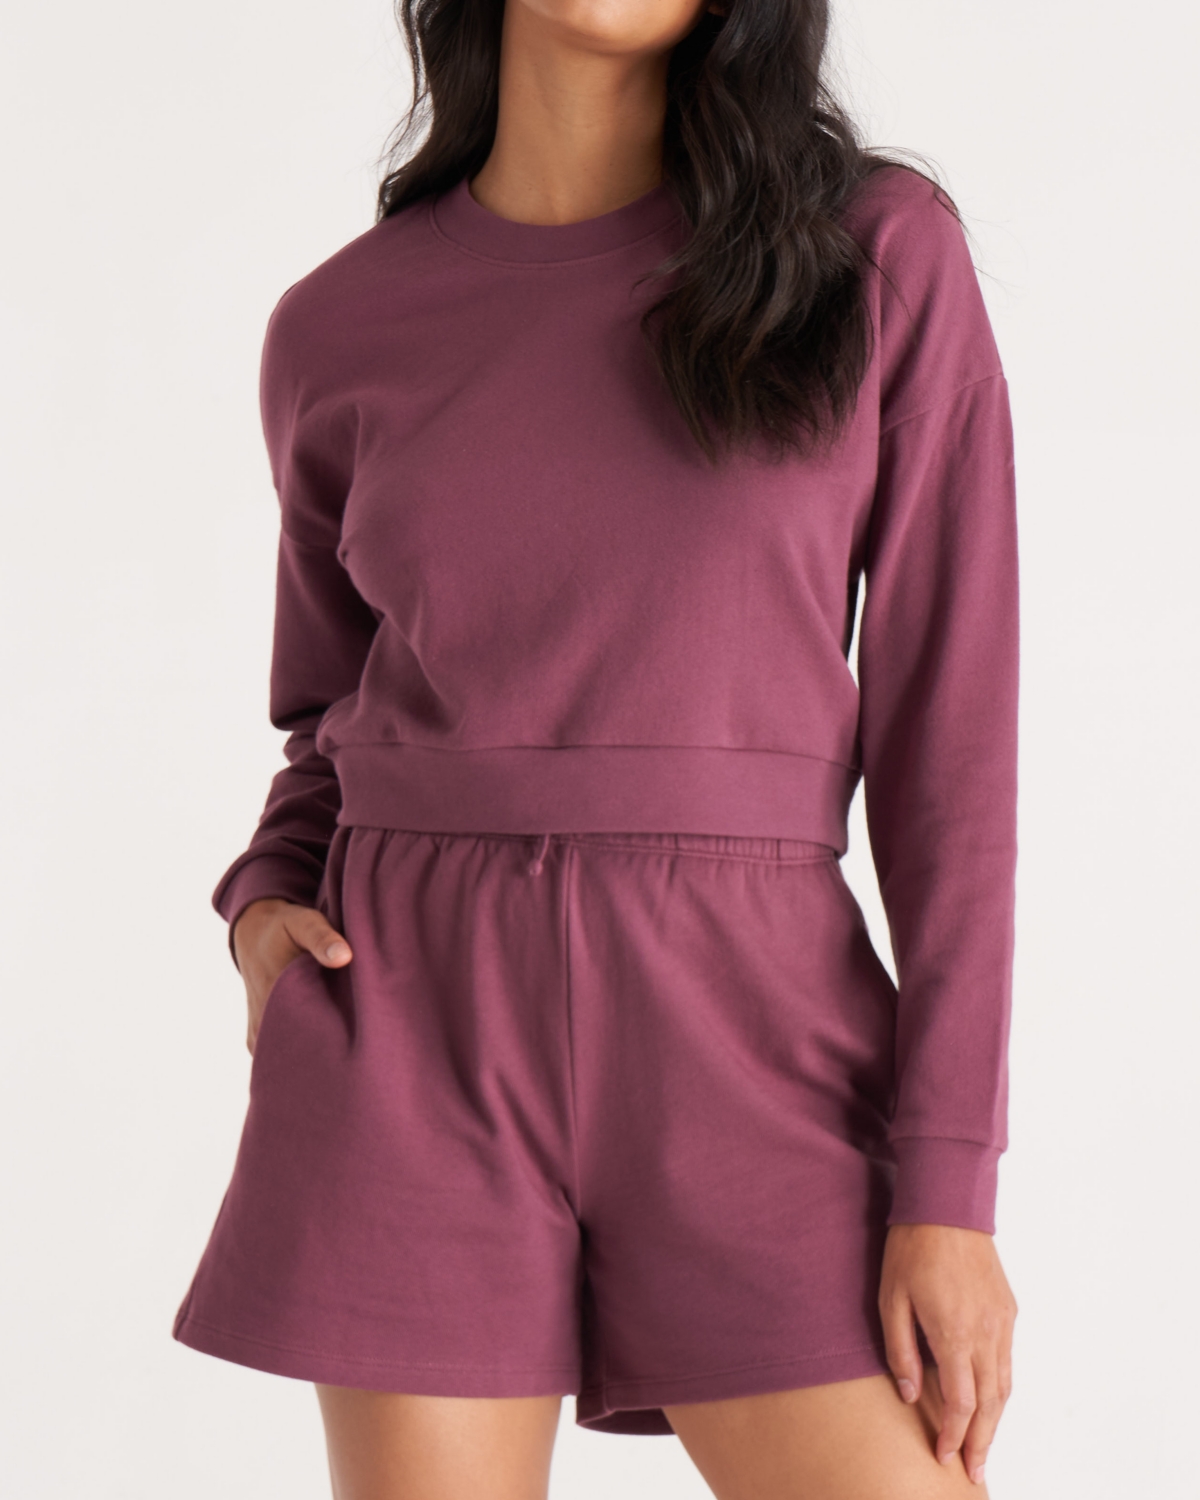  The Women's Cropped Sweatshirt- Regular Size